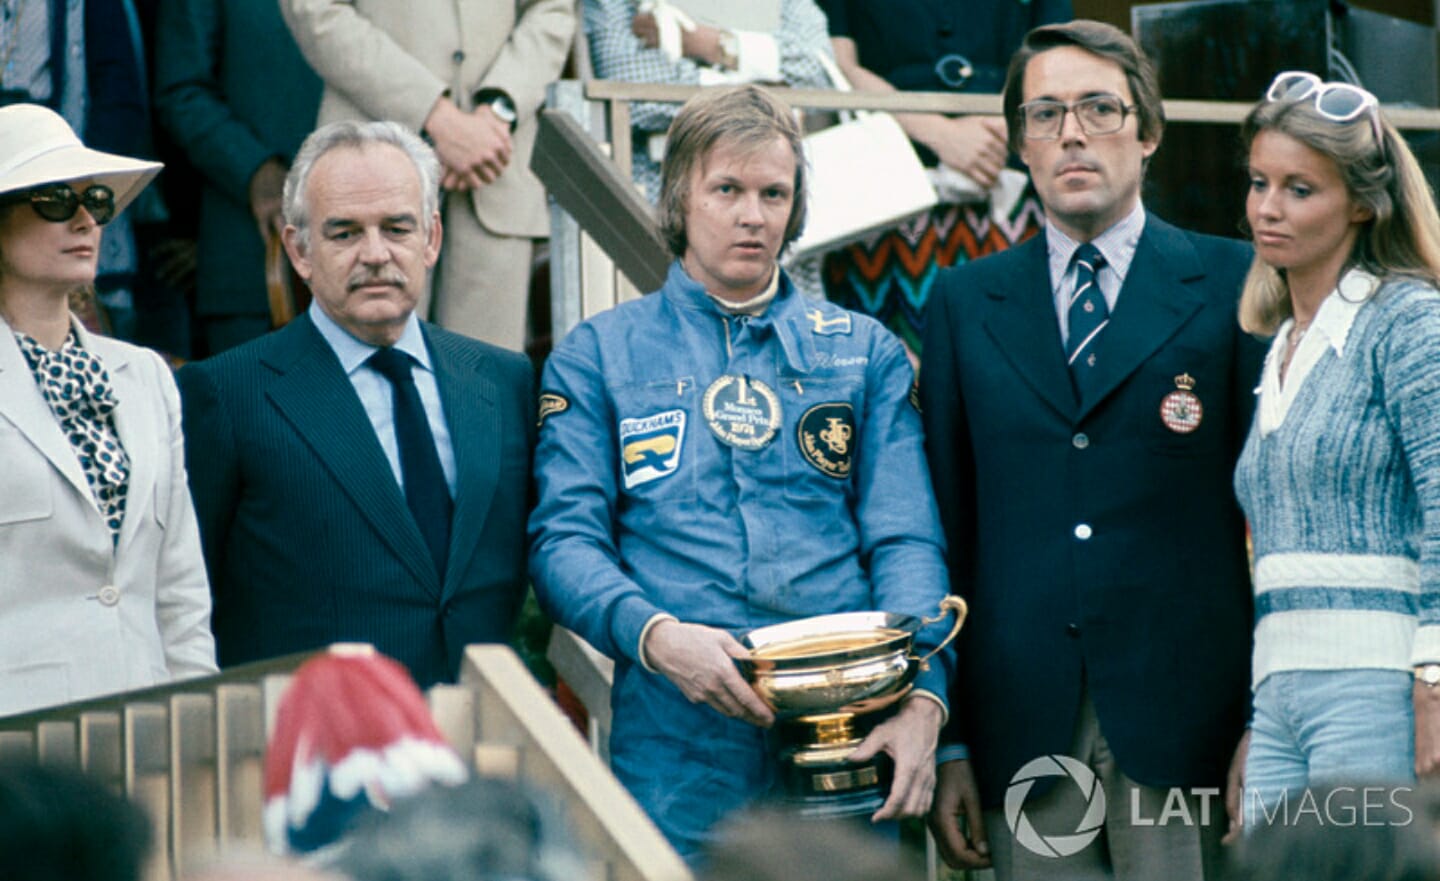 Monaco Grand Prix was a Formula One motor race held at Monaco on 26 May 1974.